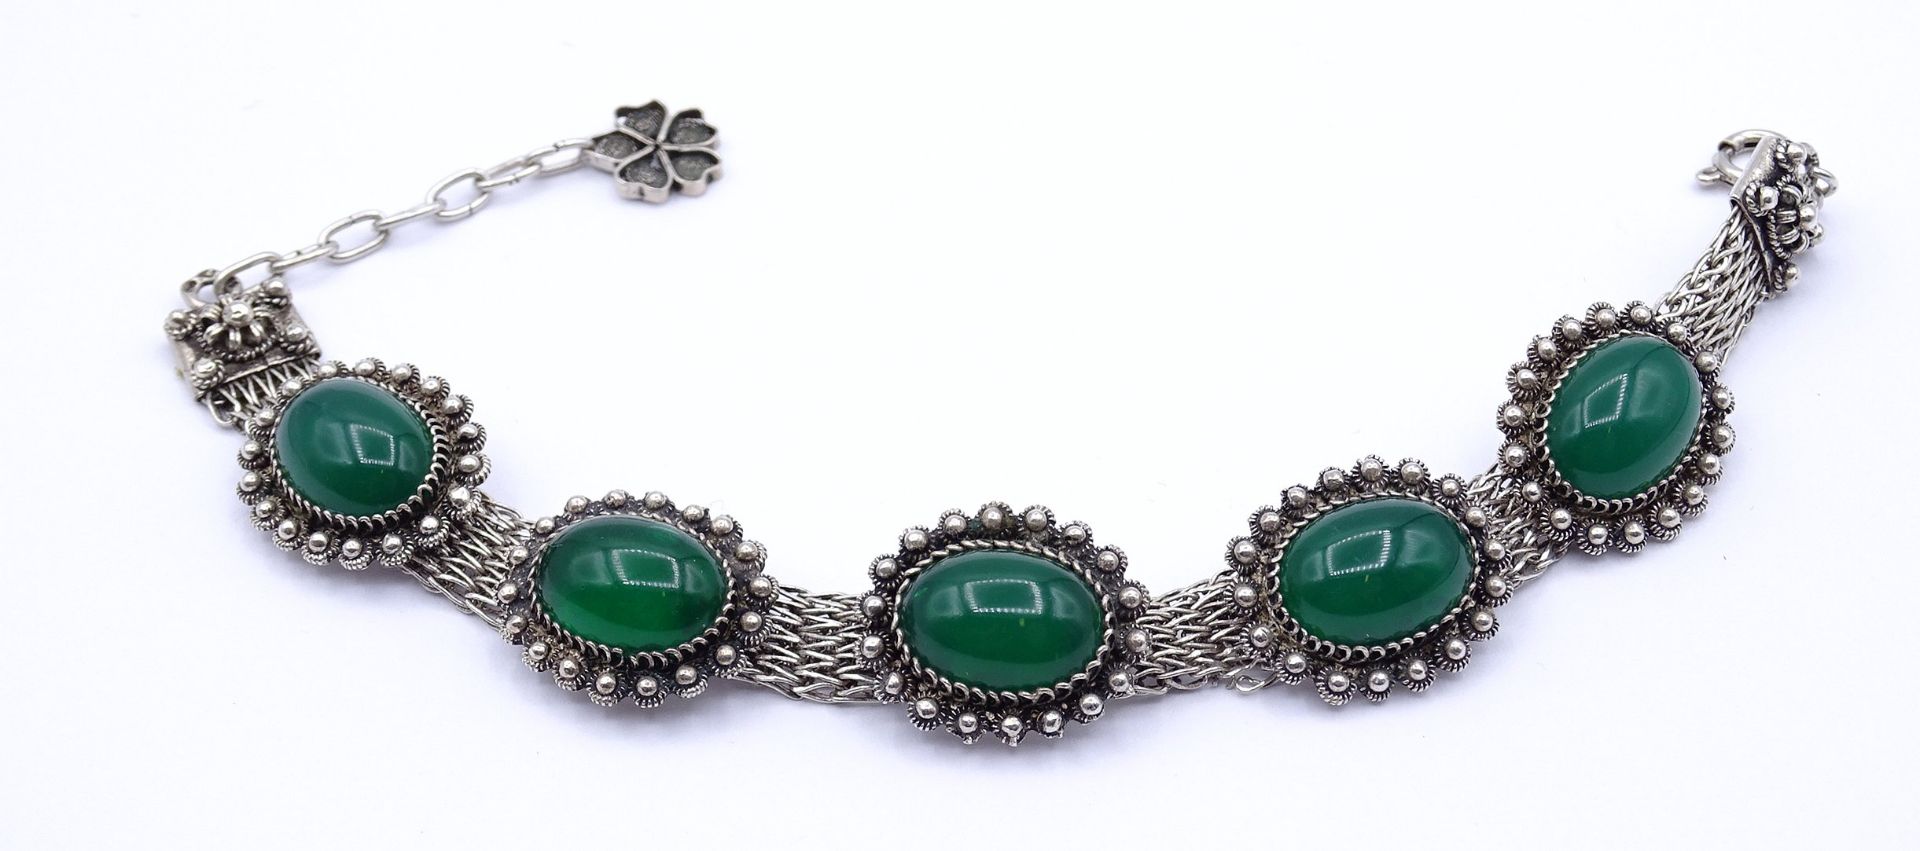 Armband mit 5 grünen Cabochons, Silber 0.800, L. 17 - 20cm, 24,4g. - Bild 2 aus 3